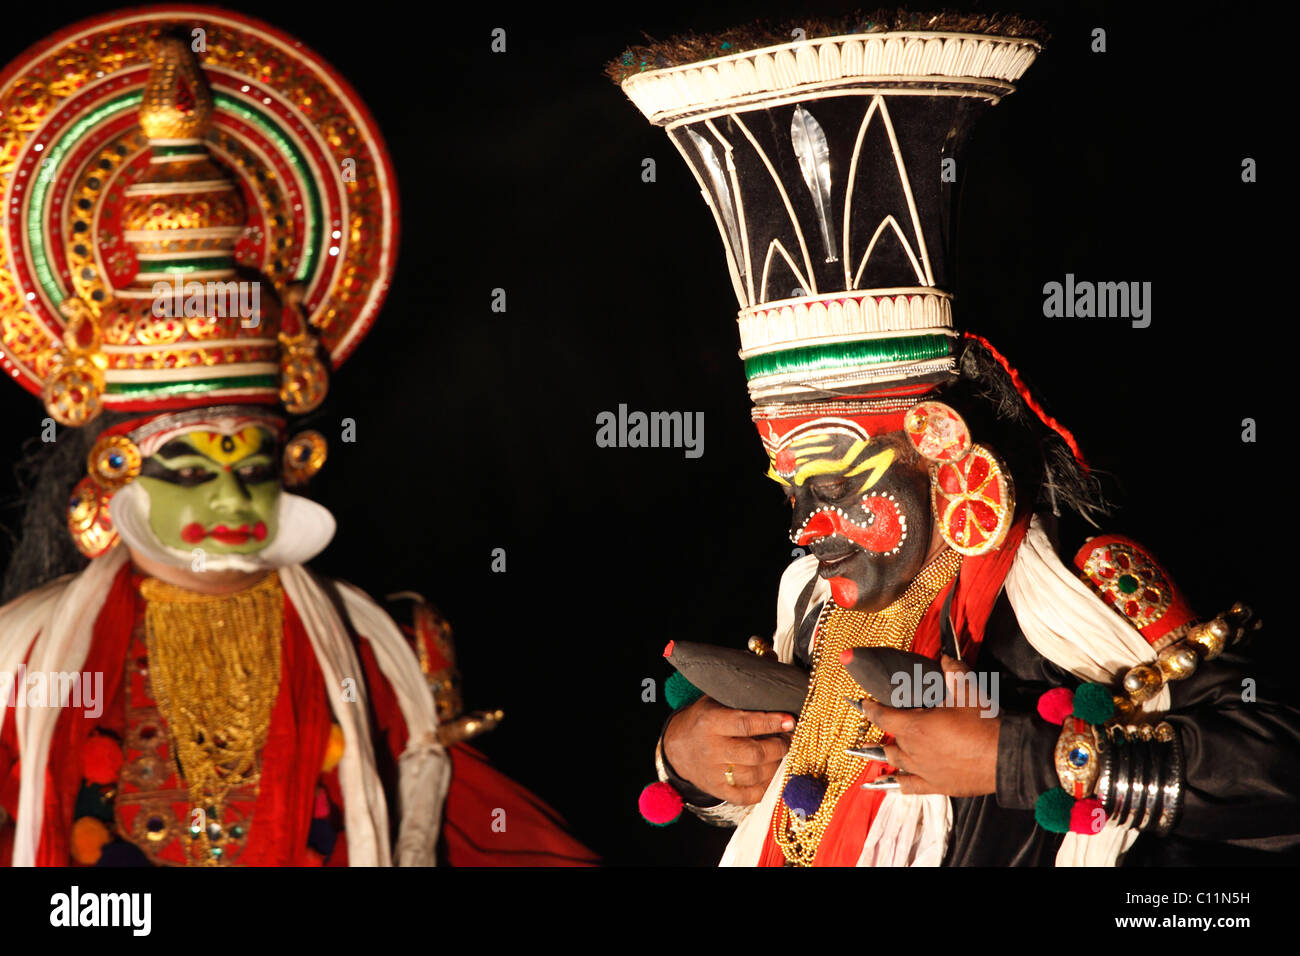 Kathakali dance, Chuvanna Thaadi character, Kerala, southern India, Asia Stock Photo